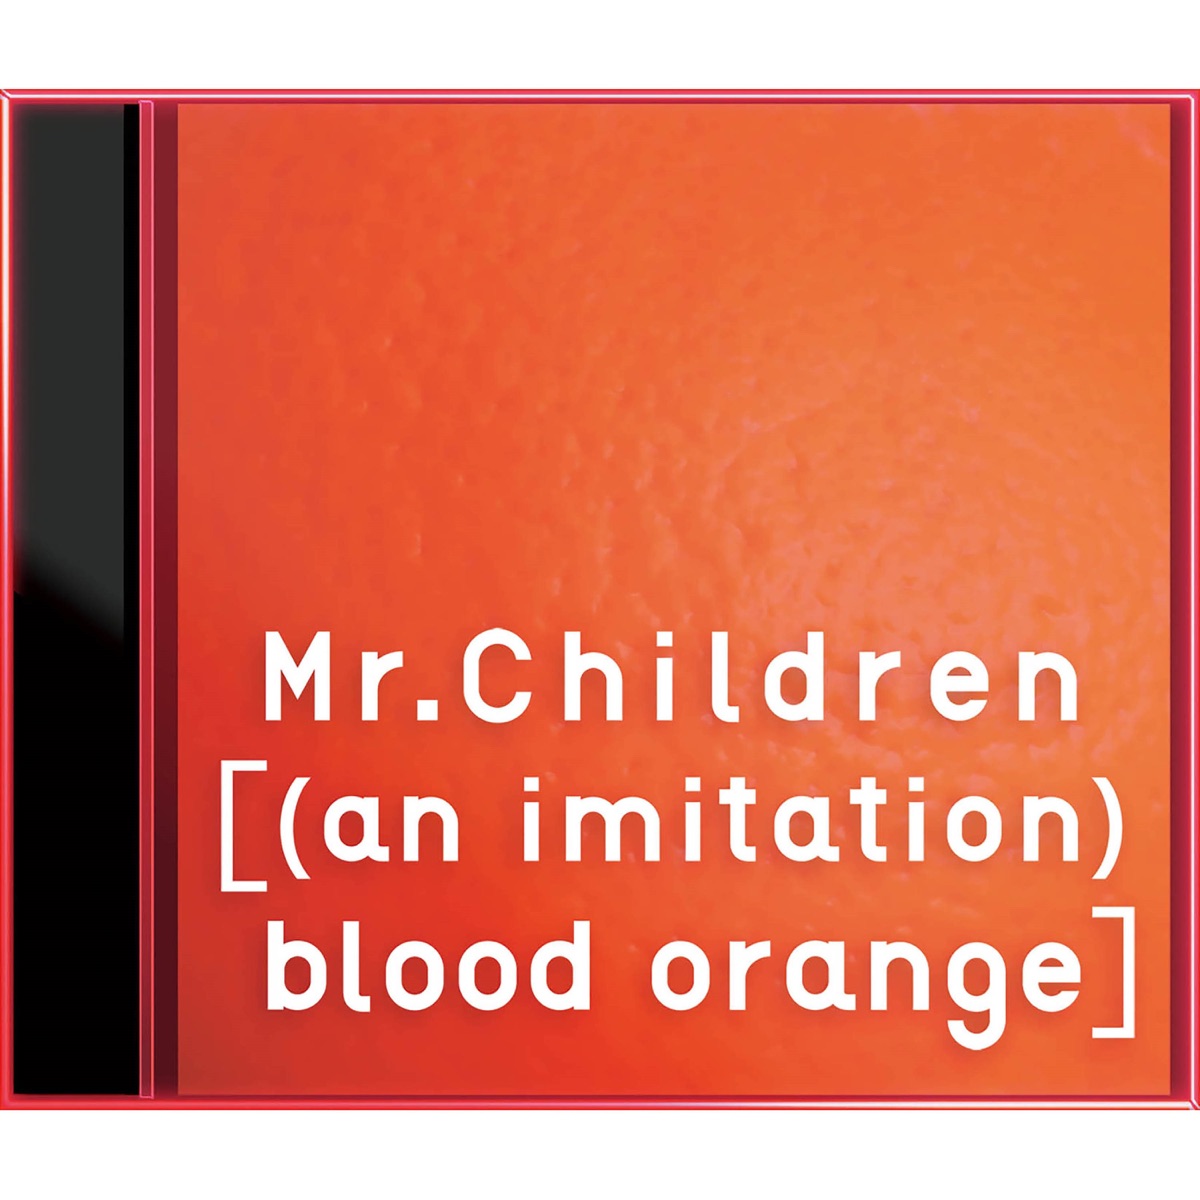 ‎[(an imitation) blood orange] - Mr.Childrenのアルバム - Apple Music